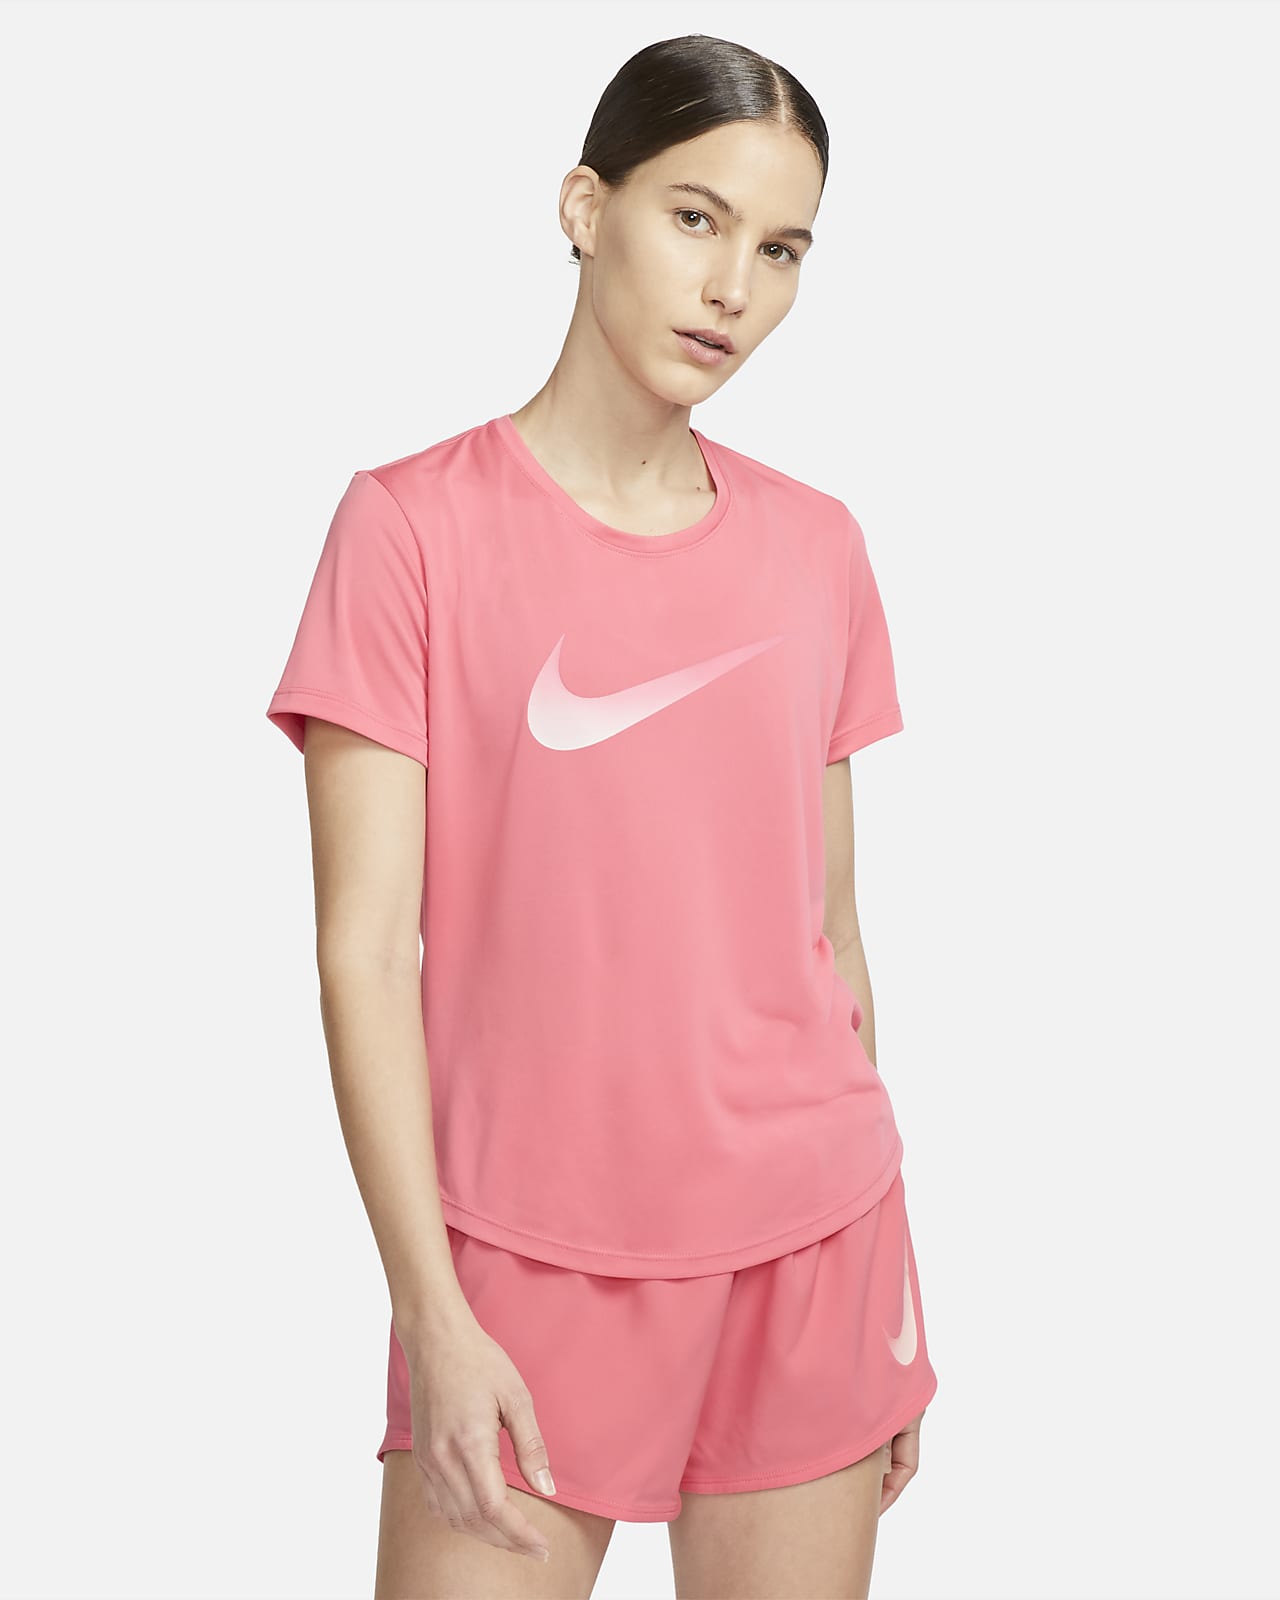 Nike Dri-FIT One Women's Short-Sleeve Running Top